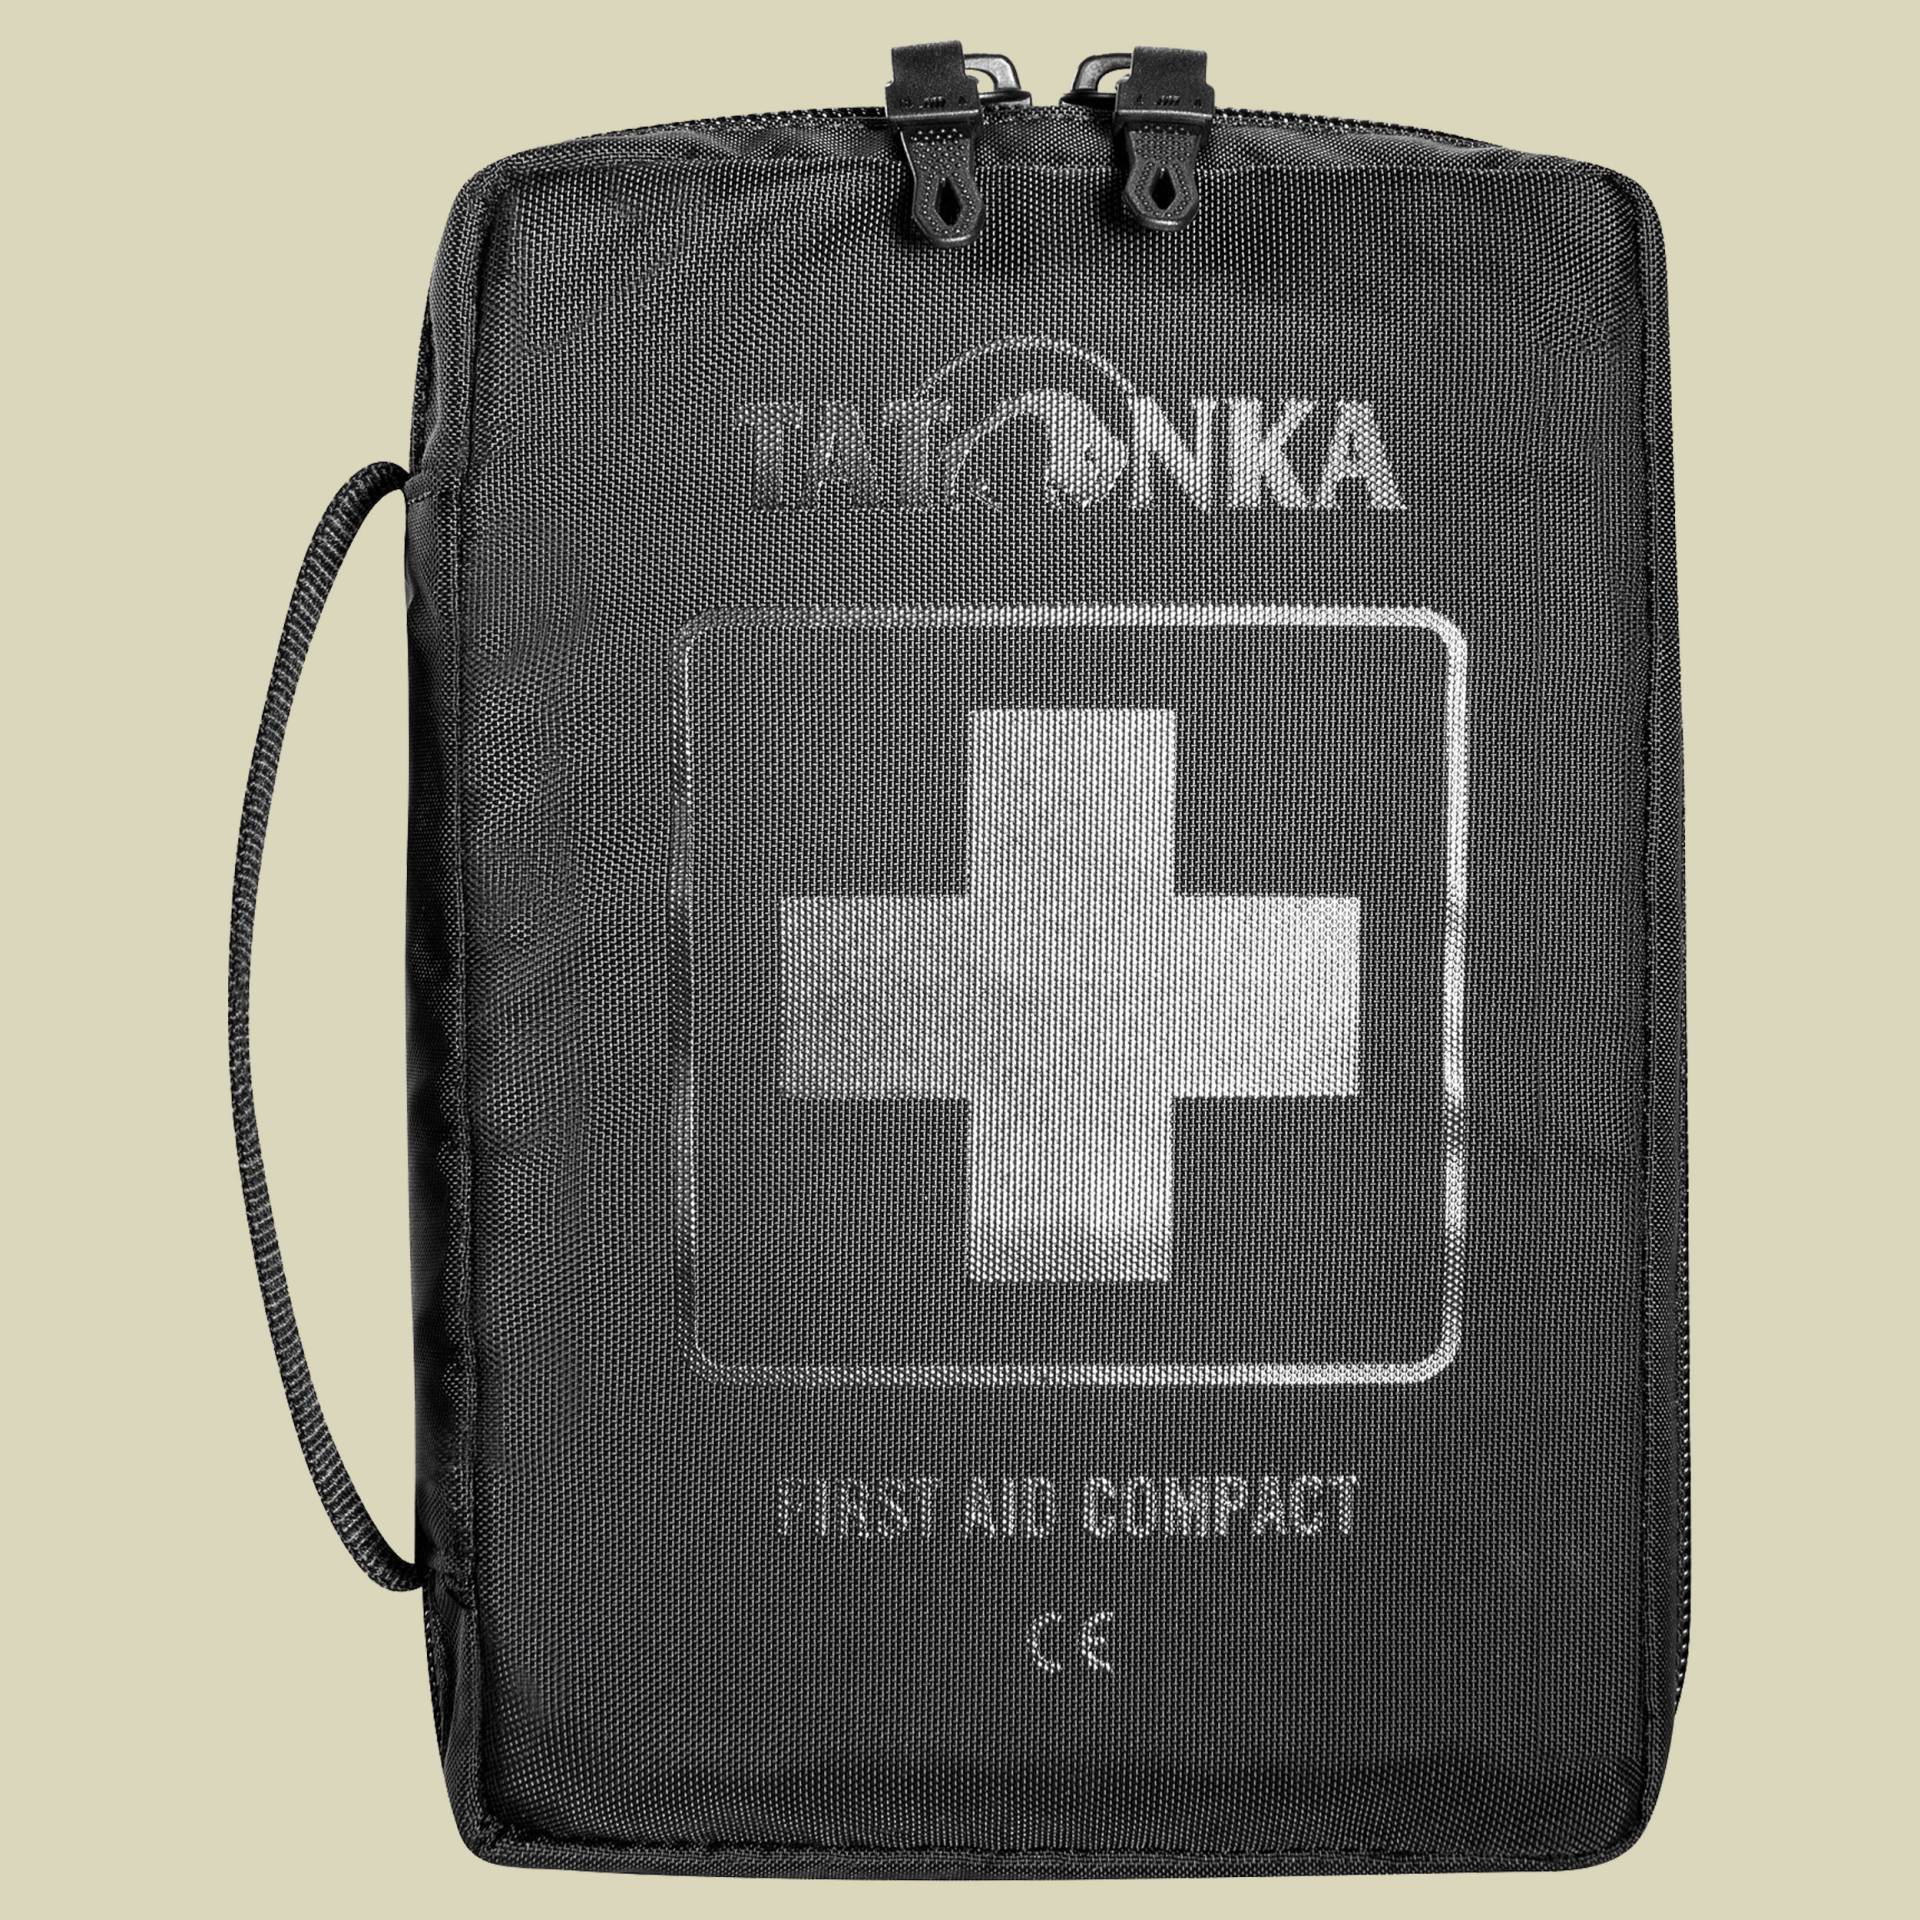 First Aid Compact Farbe black von Tatonka